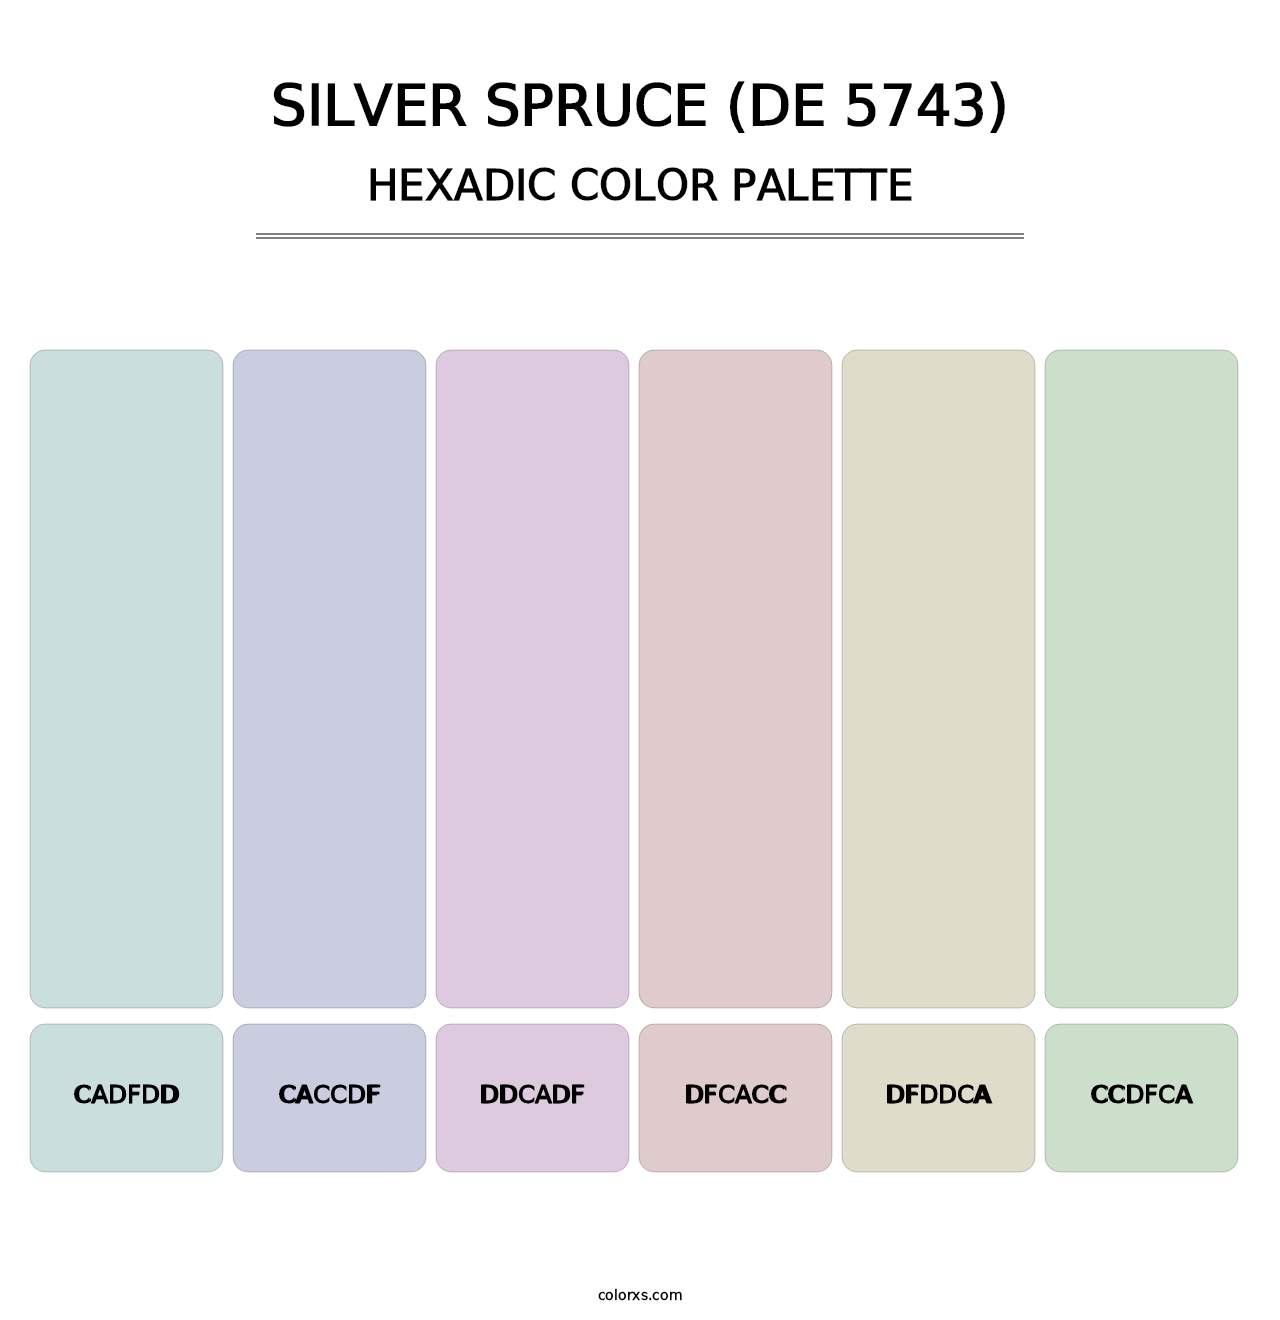 Silver Spruce (DE 5743) - Hexadic Color Palette